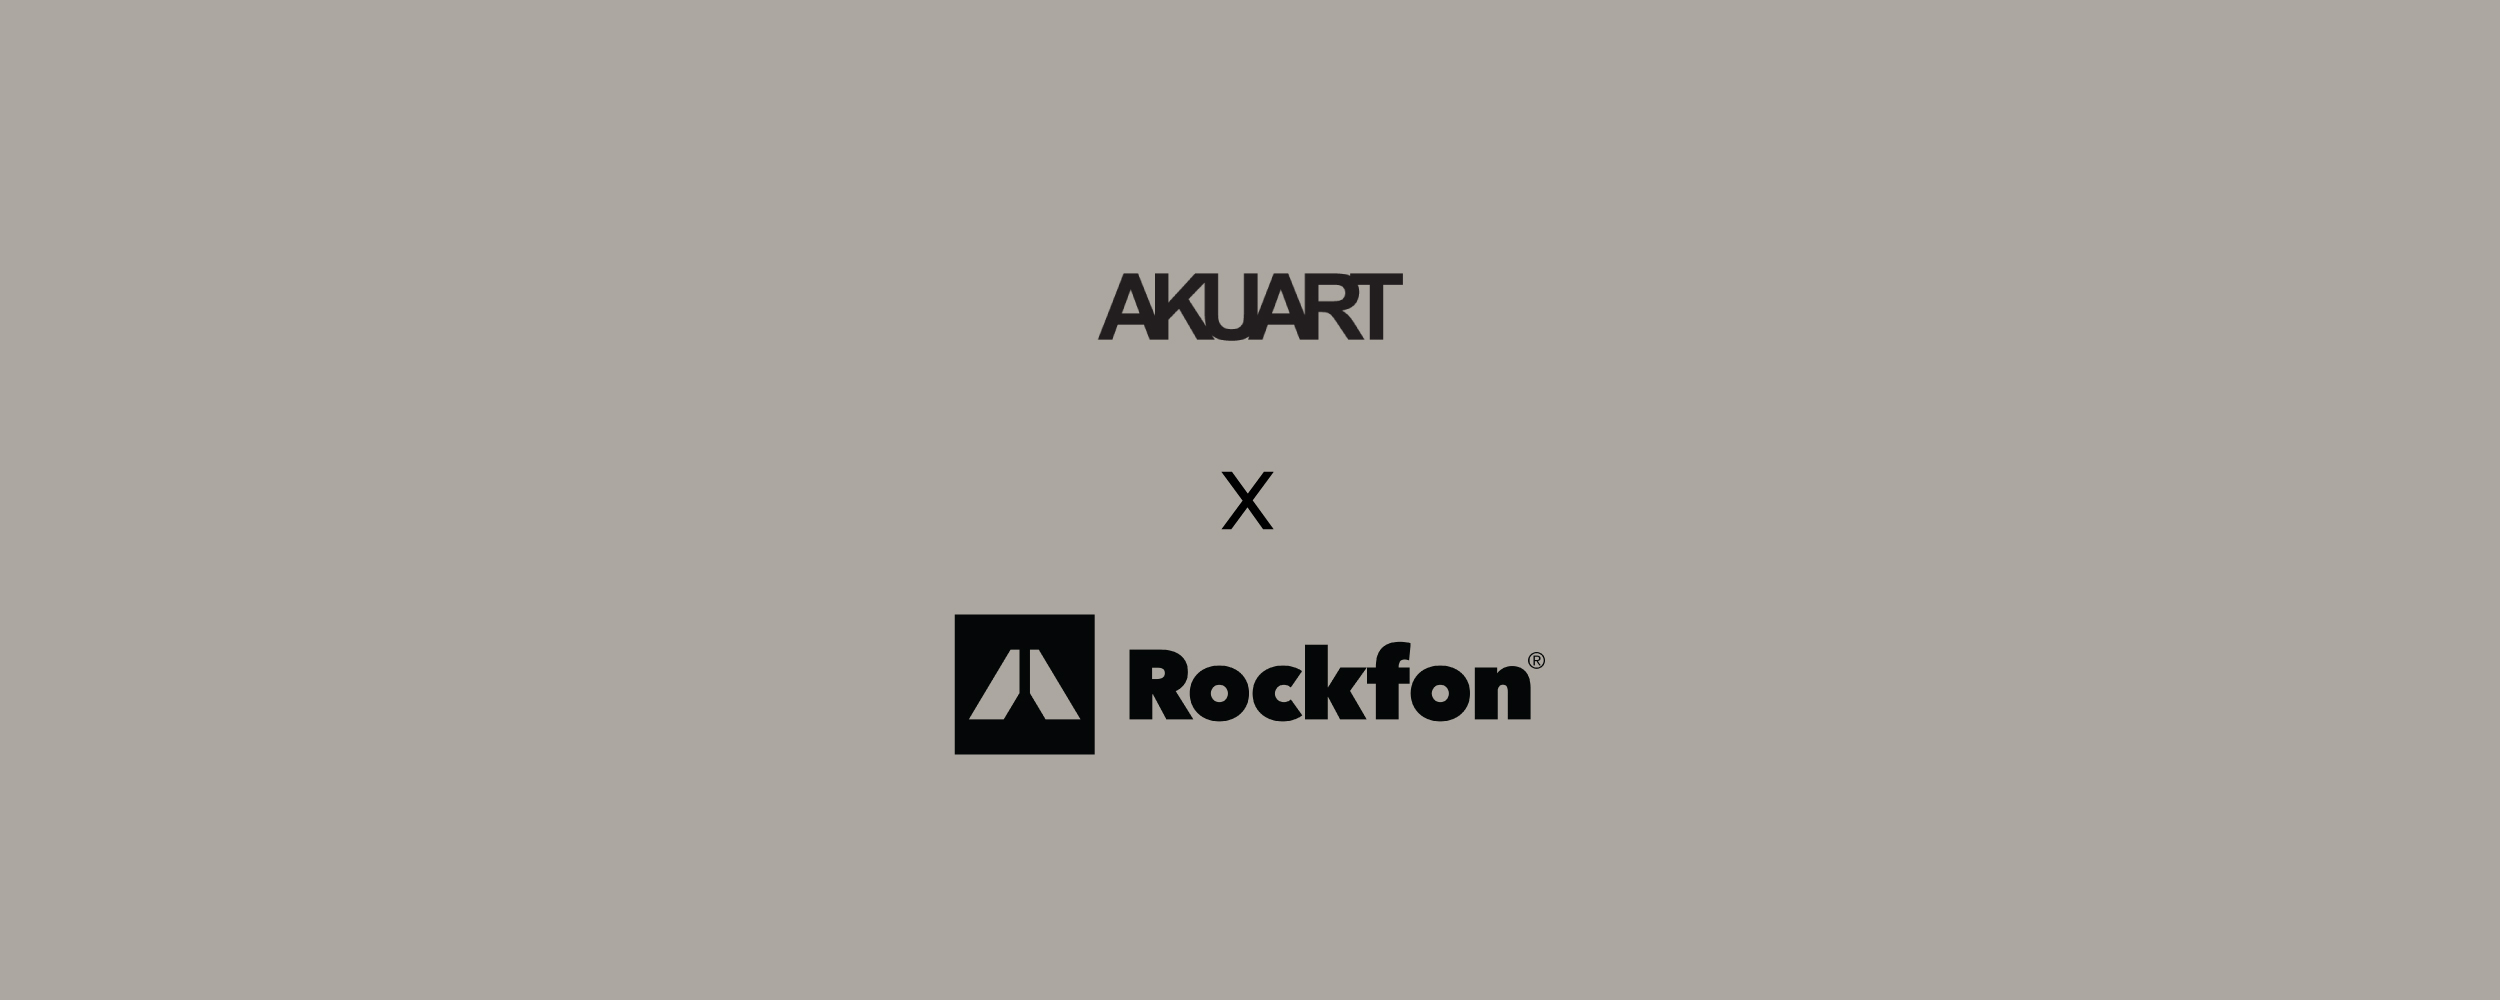 Akuart design partnership with Rockfon